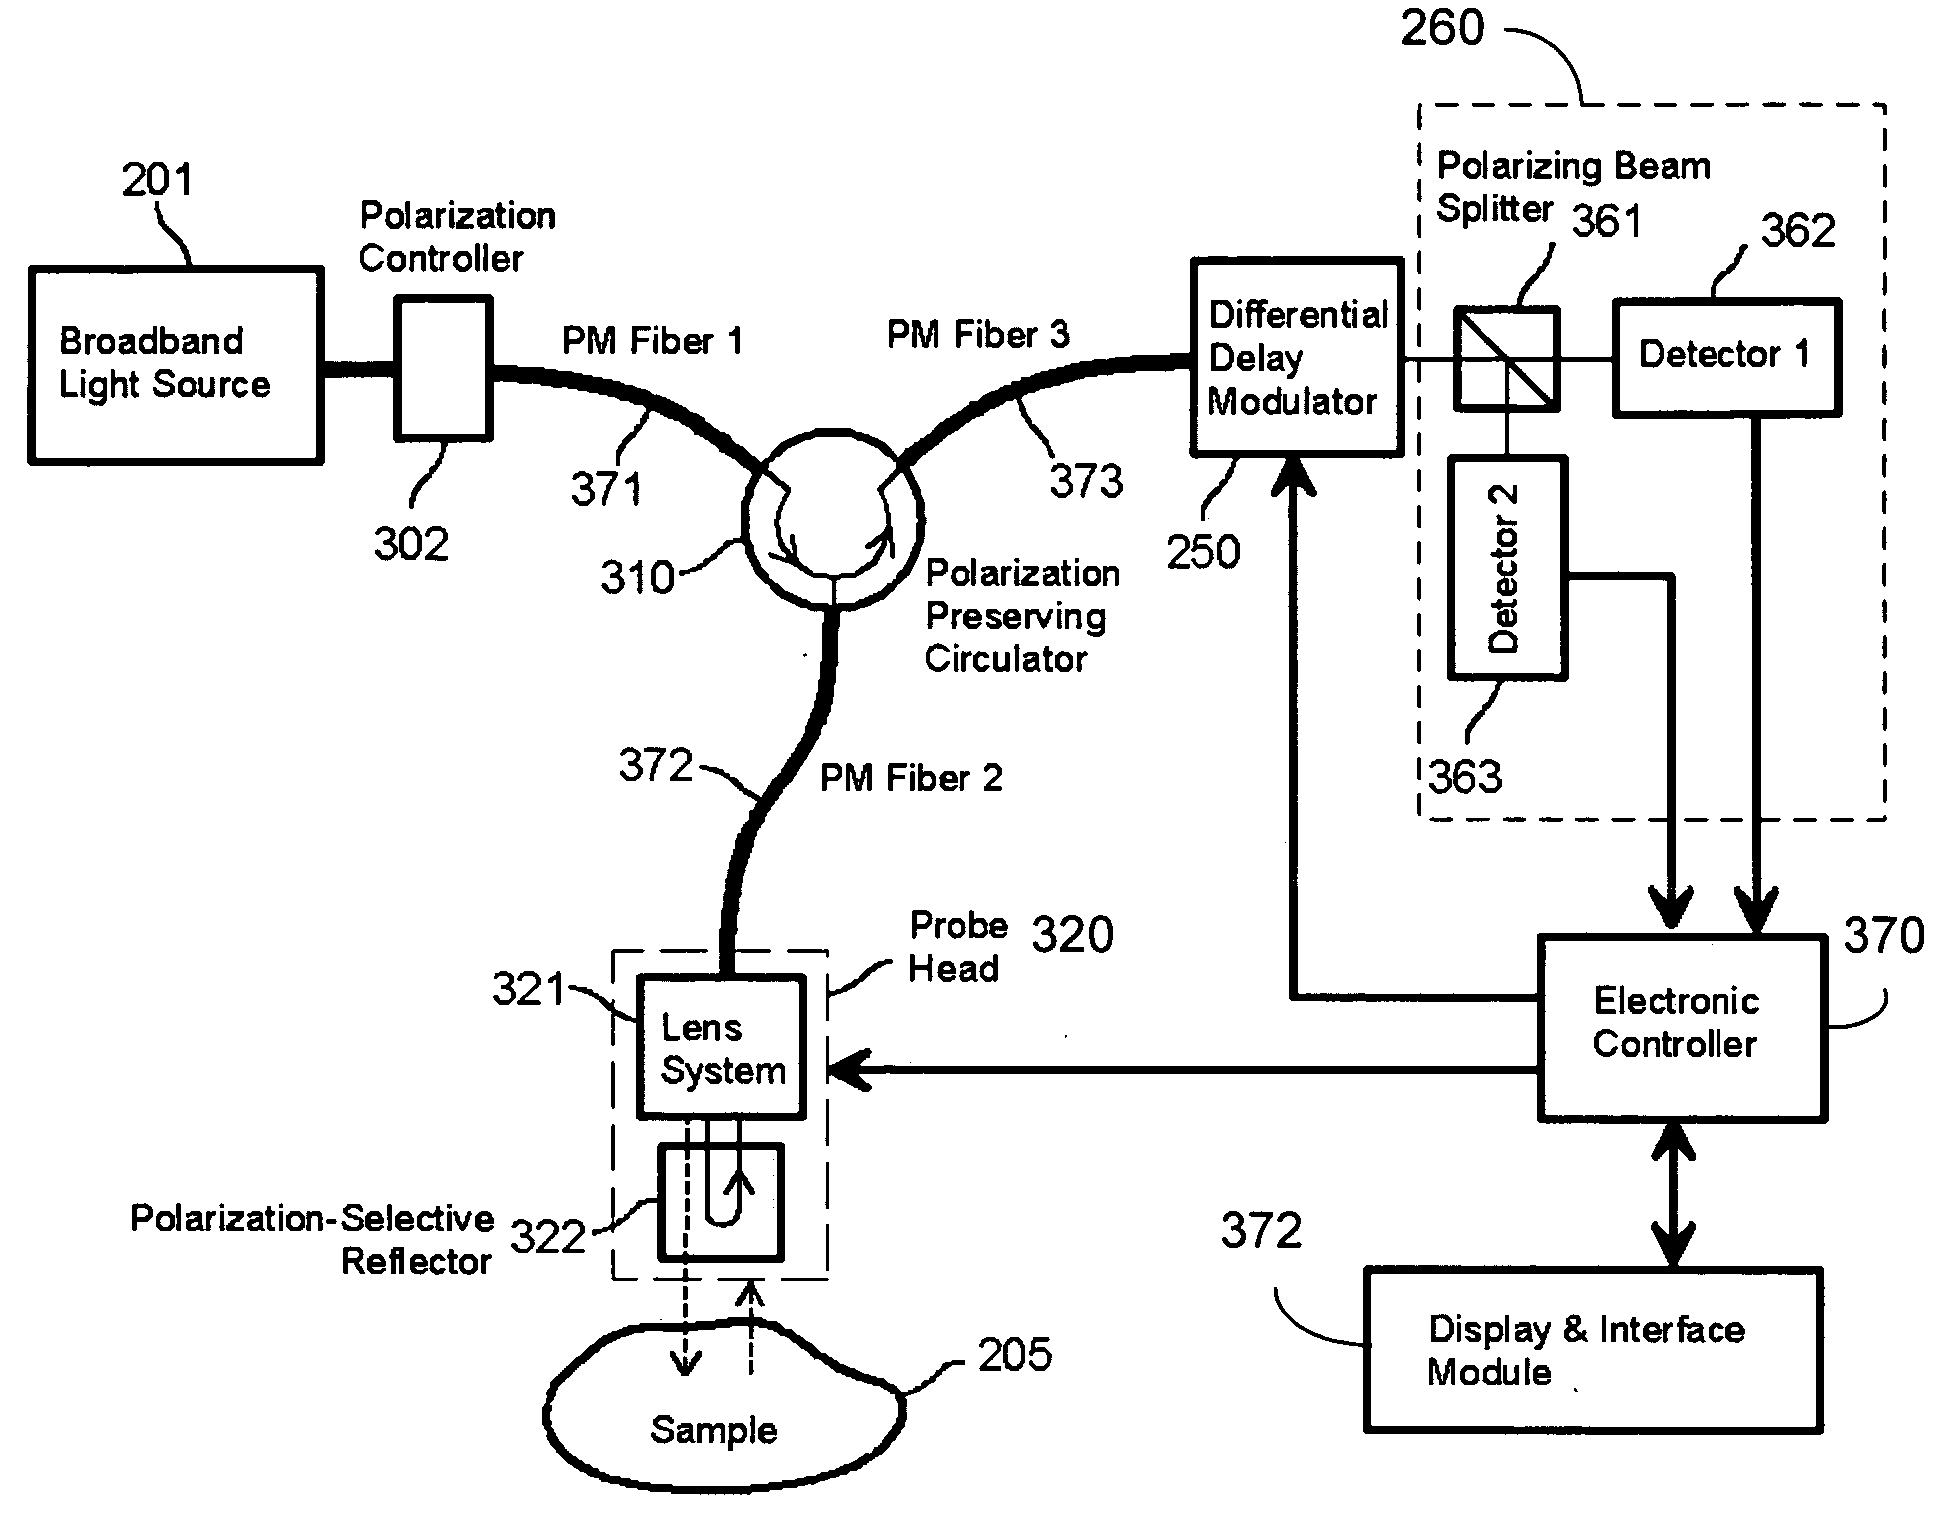 Coherence-gated optical glucose monitor